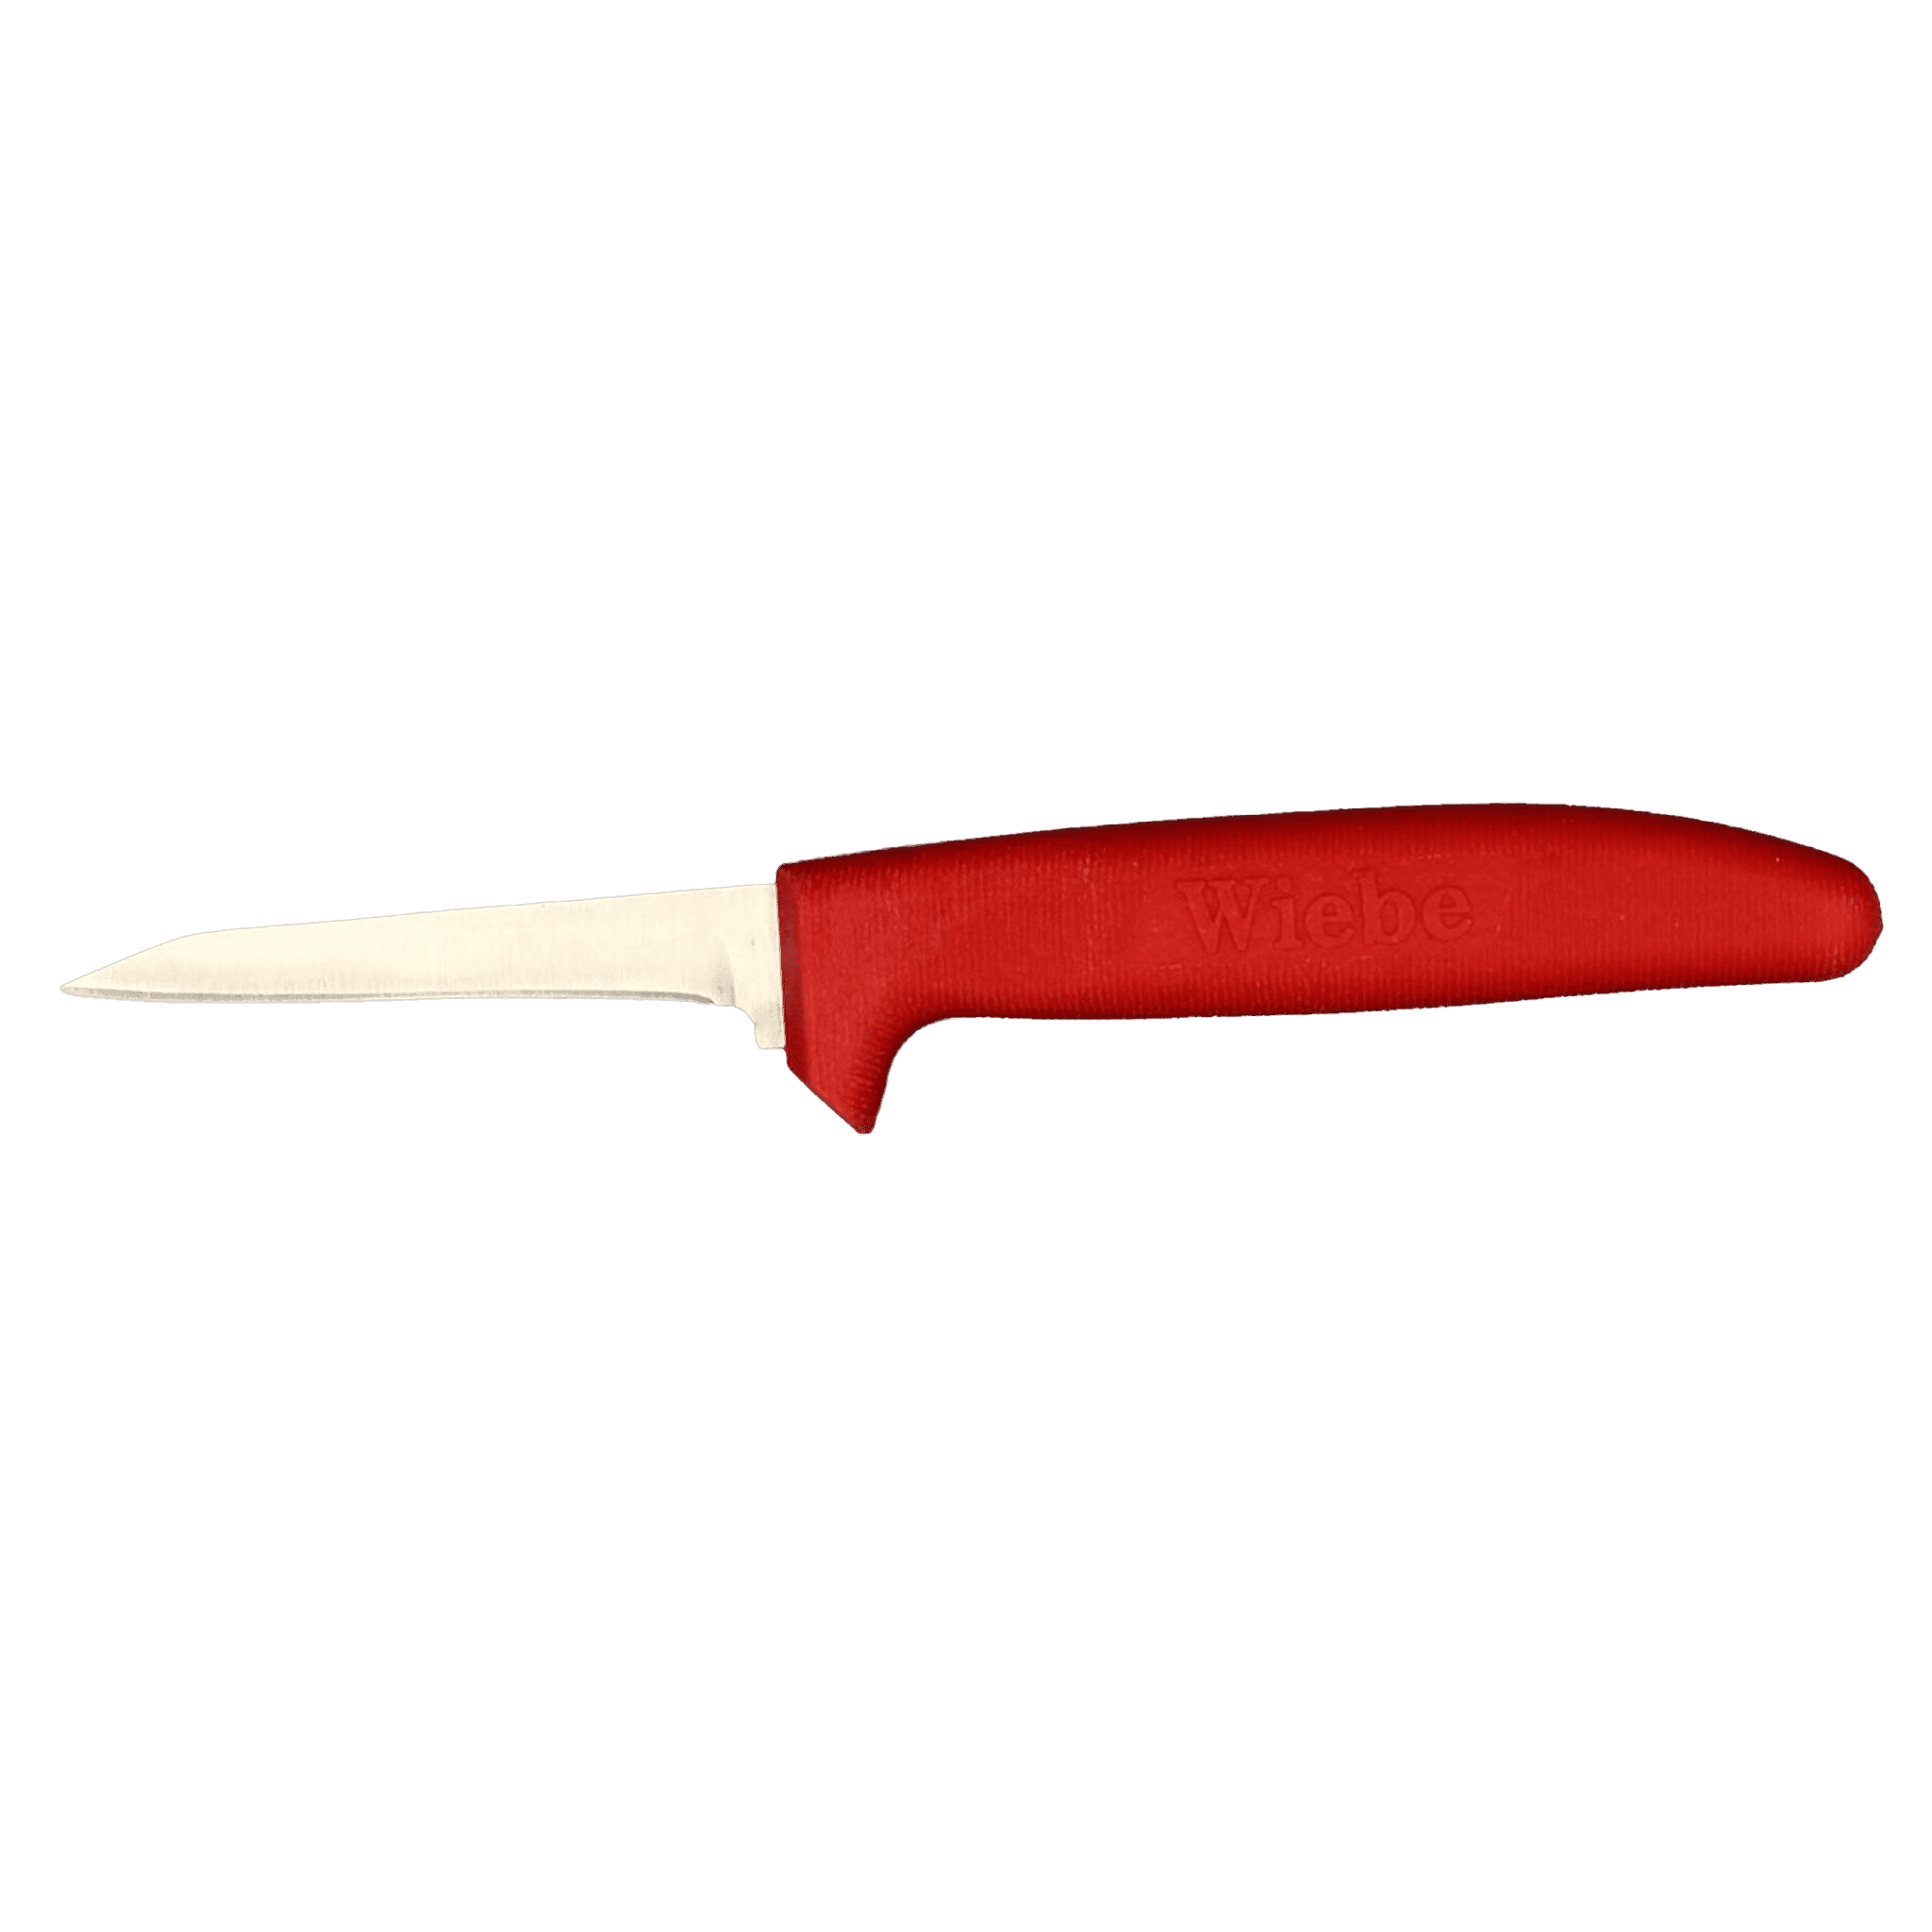 Wiebe Skinning Knife (Soft Handle) - Matuska Taxidermy Supply Company